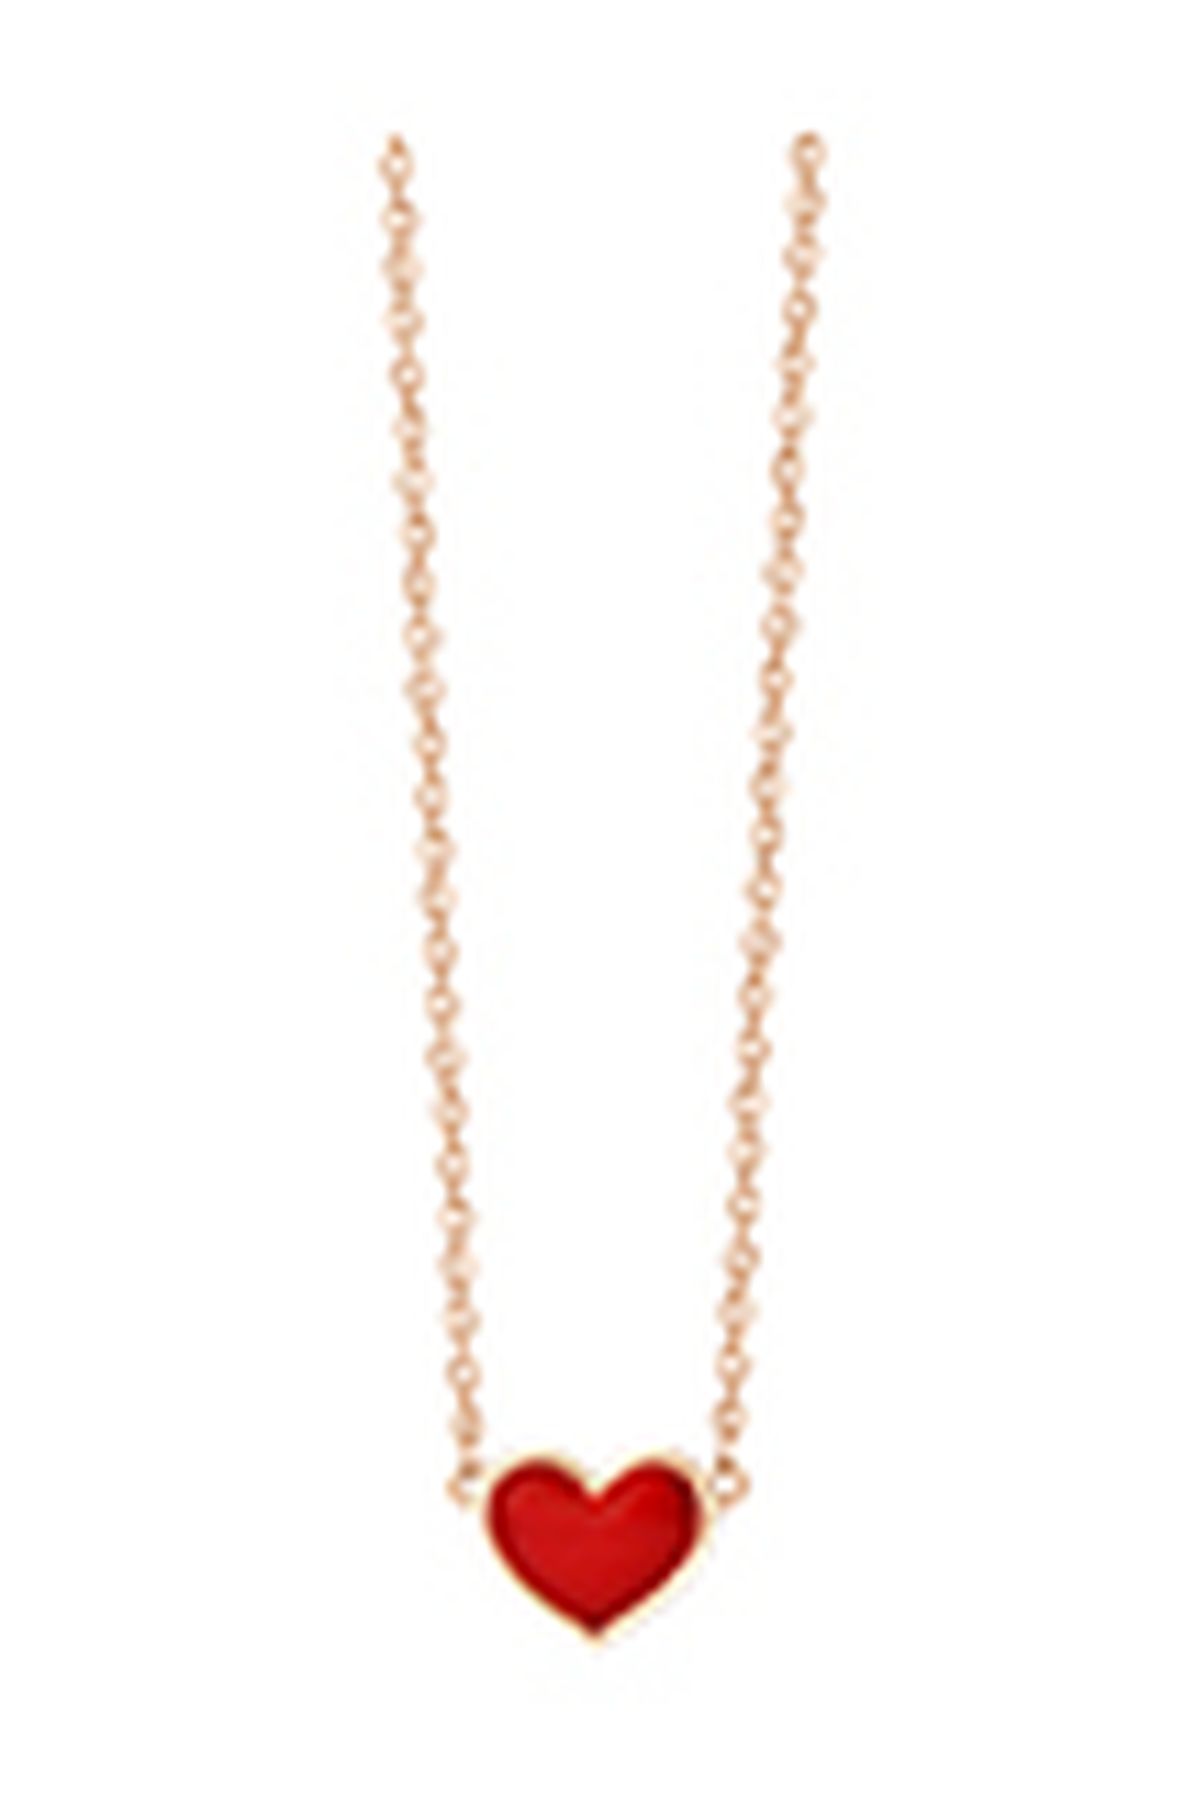  Heart emoji necklace